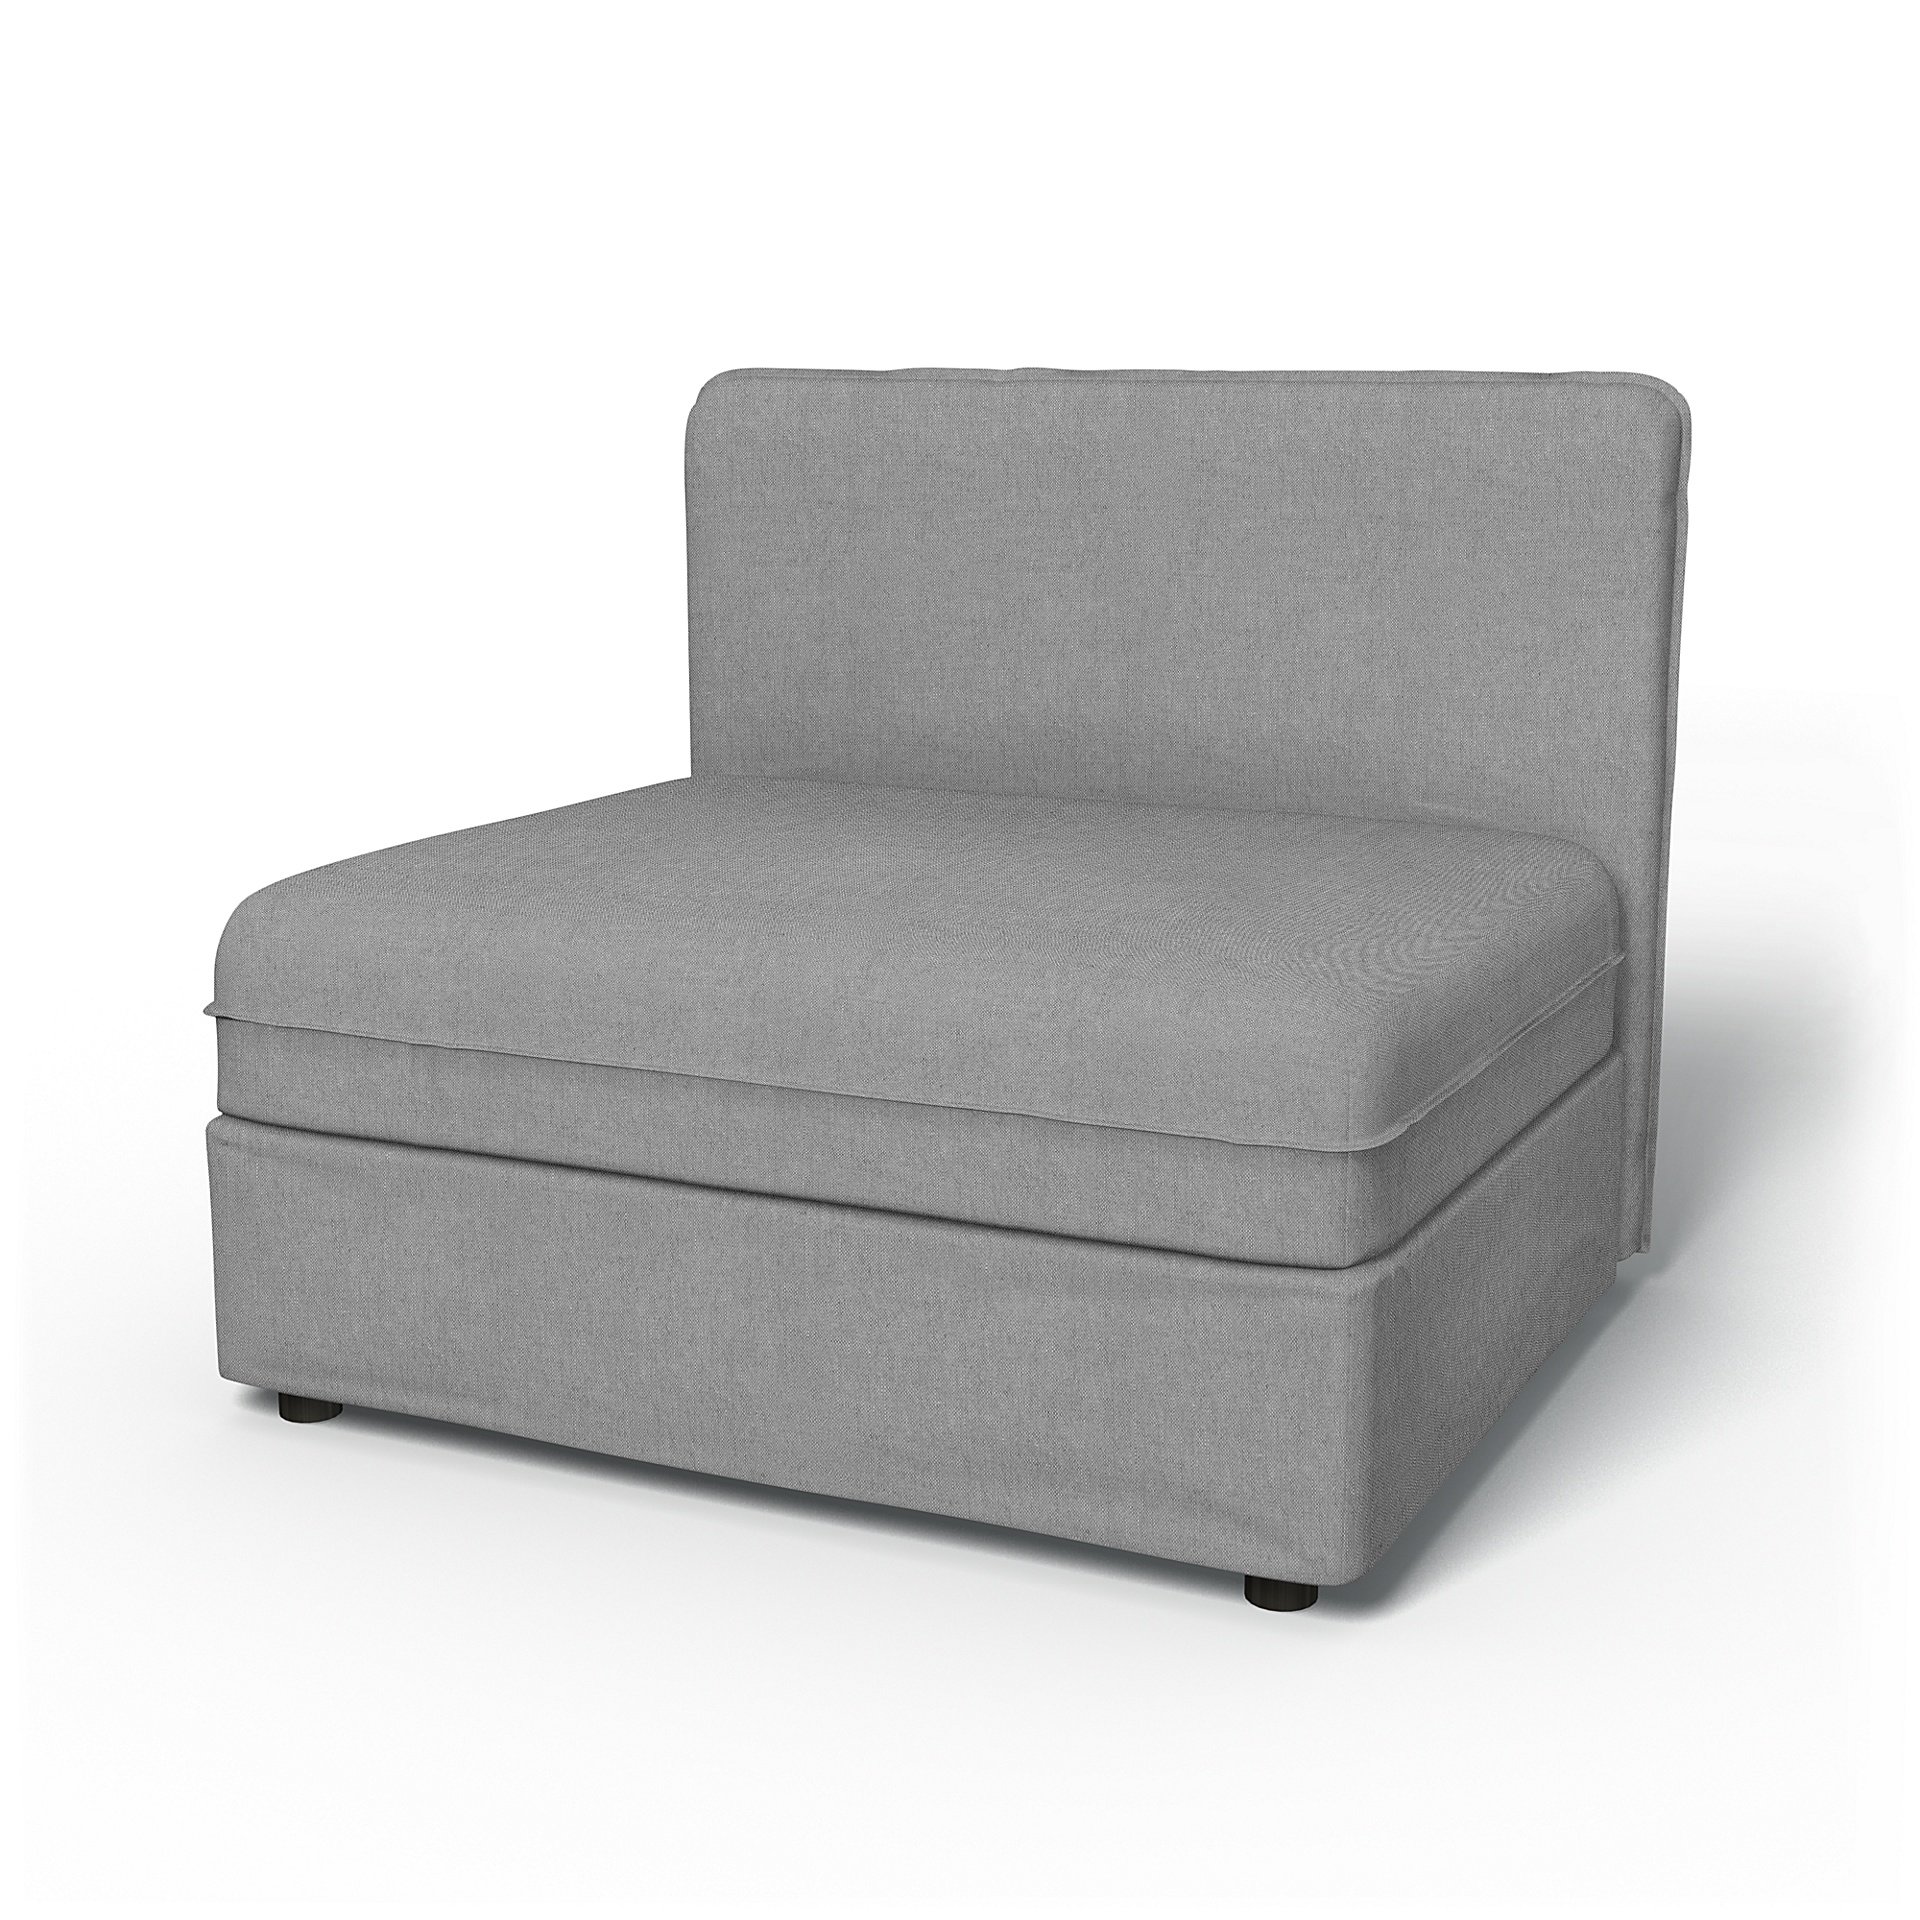 IKEA - Vallentuna Seat Module with Low Back Cover 100x80cm 39x32in, Graphite, Linen - Bemz